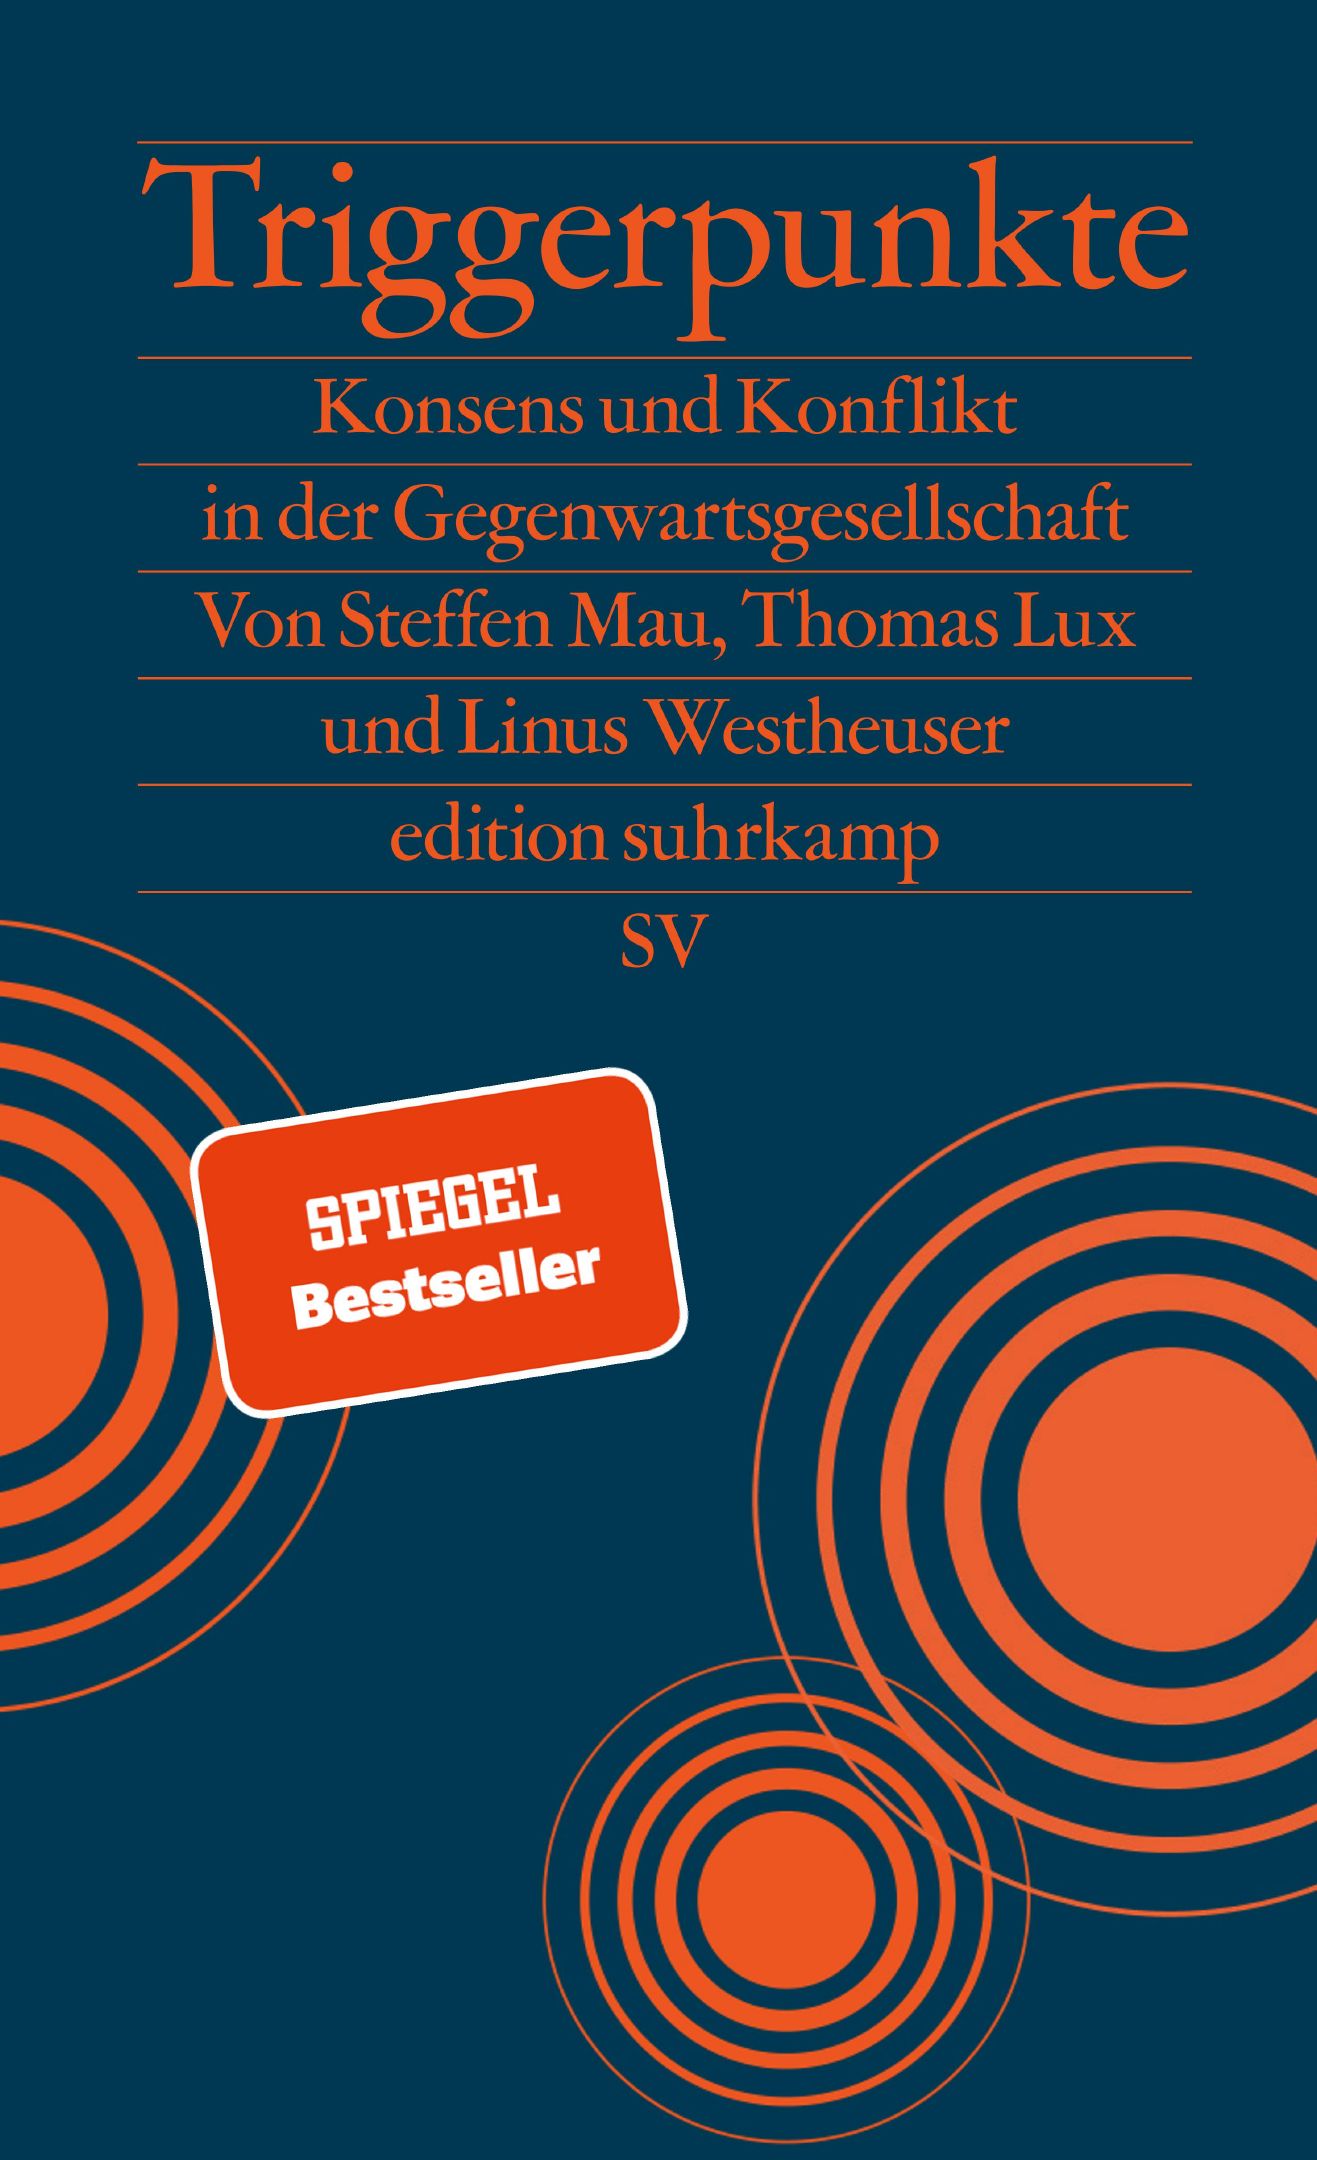 Steffen Mau, Thomas Lux, Linus Westheuser: Triggerpunkte (Paperback, Suhrkamp)